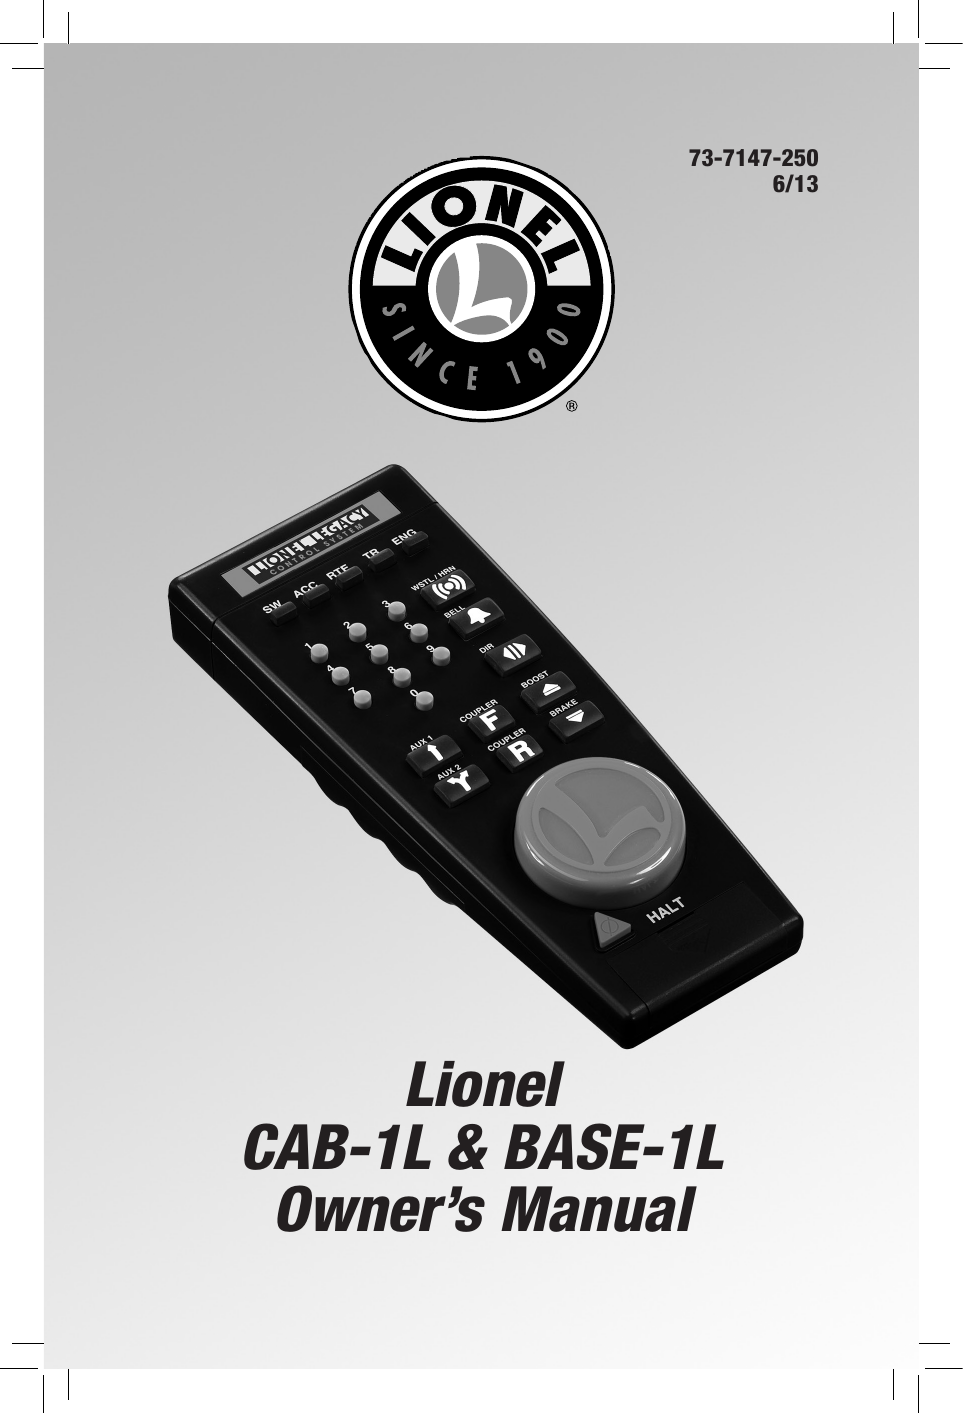 LionelCAB-1L &amp; BASE-1L Owner’s Manual73-7147-2506/13 